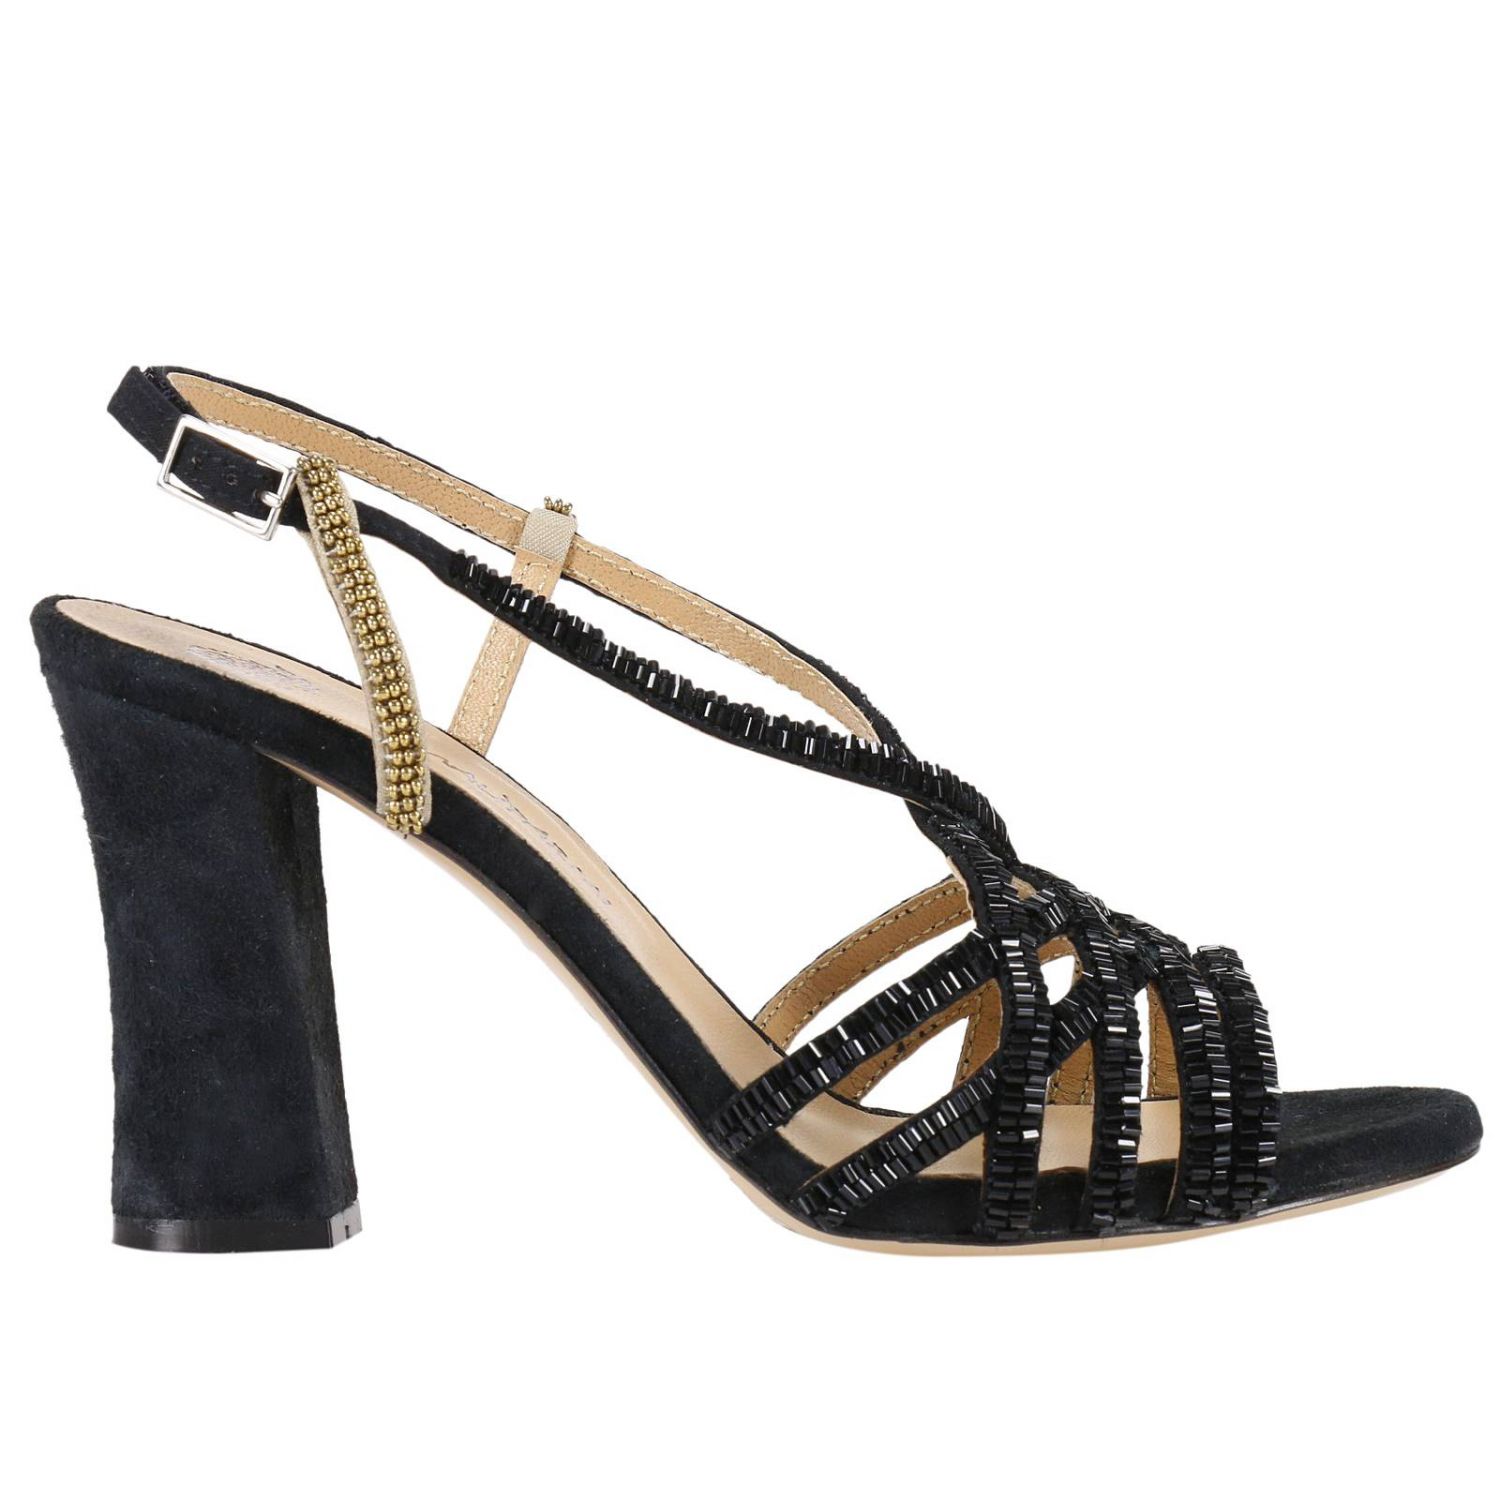 Maliparmi Outlet: Shoes women | Heeled Sandals Maliparmi Women Black ...